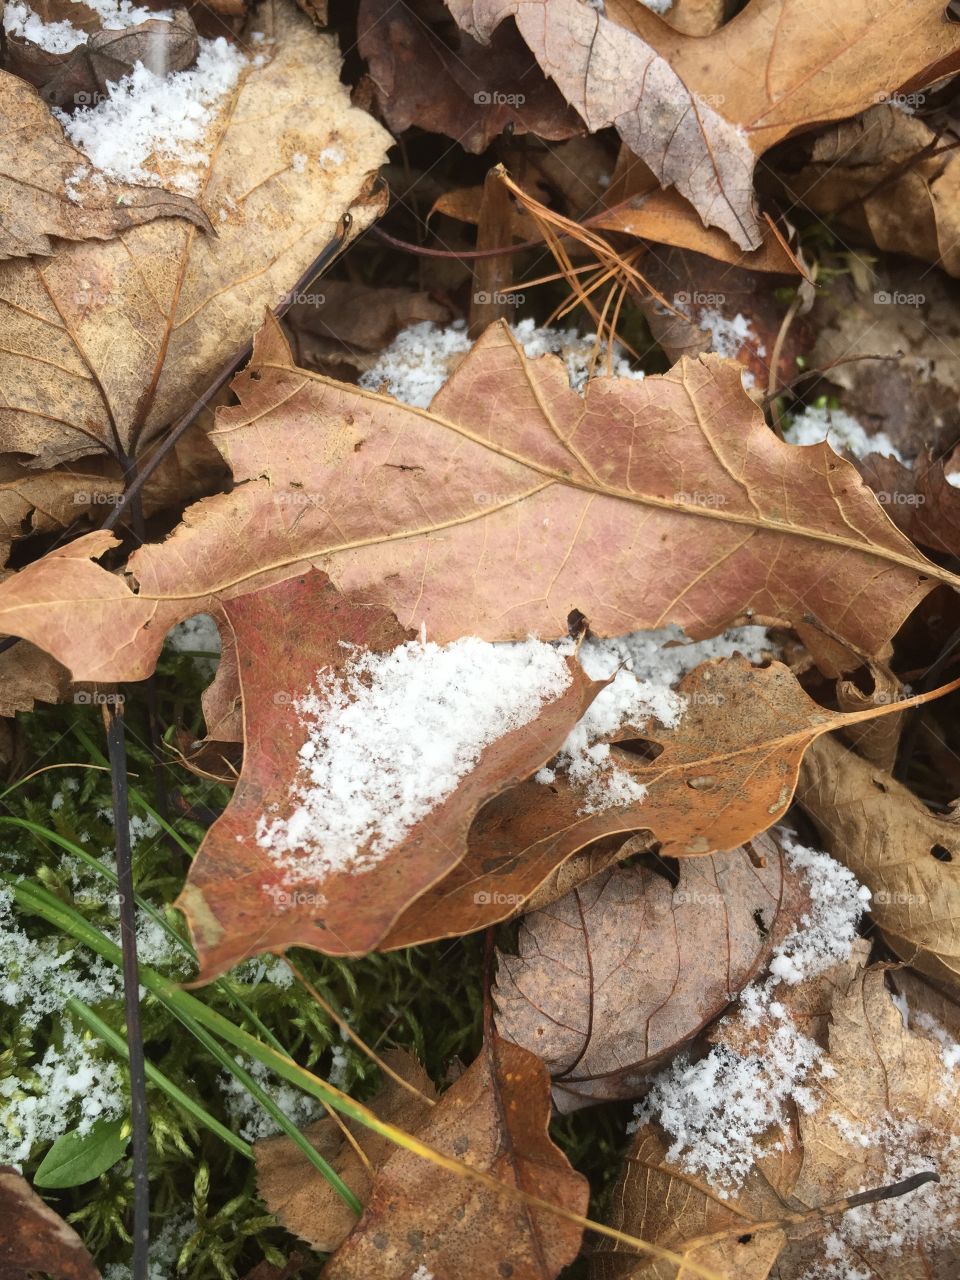 Snowflakes on fallen leaves 